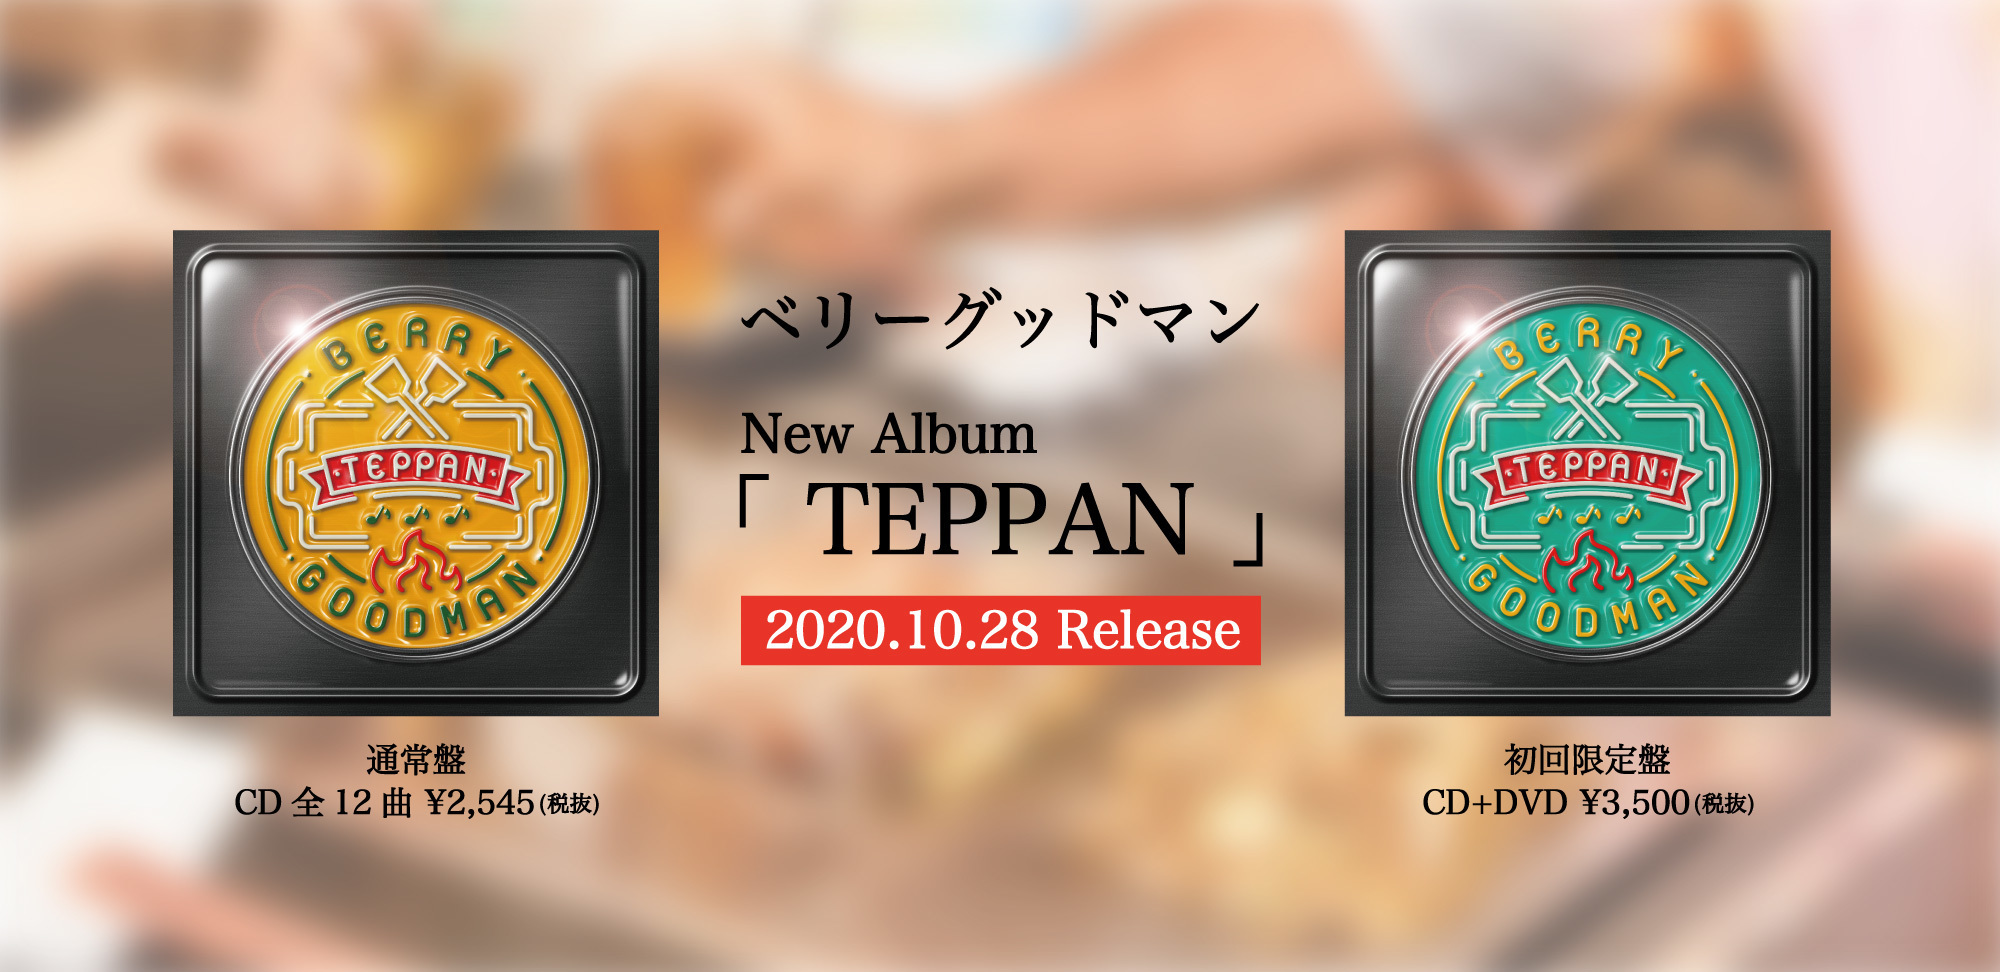 Release】フルアルバム「TEPPAN」発売決定 | BERRY GOODMAN OFFICIAL ...